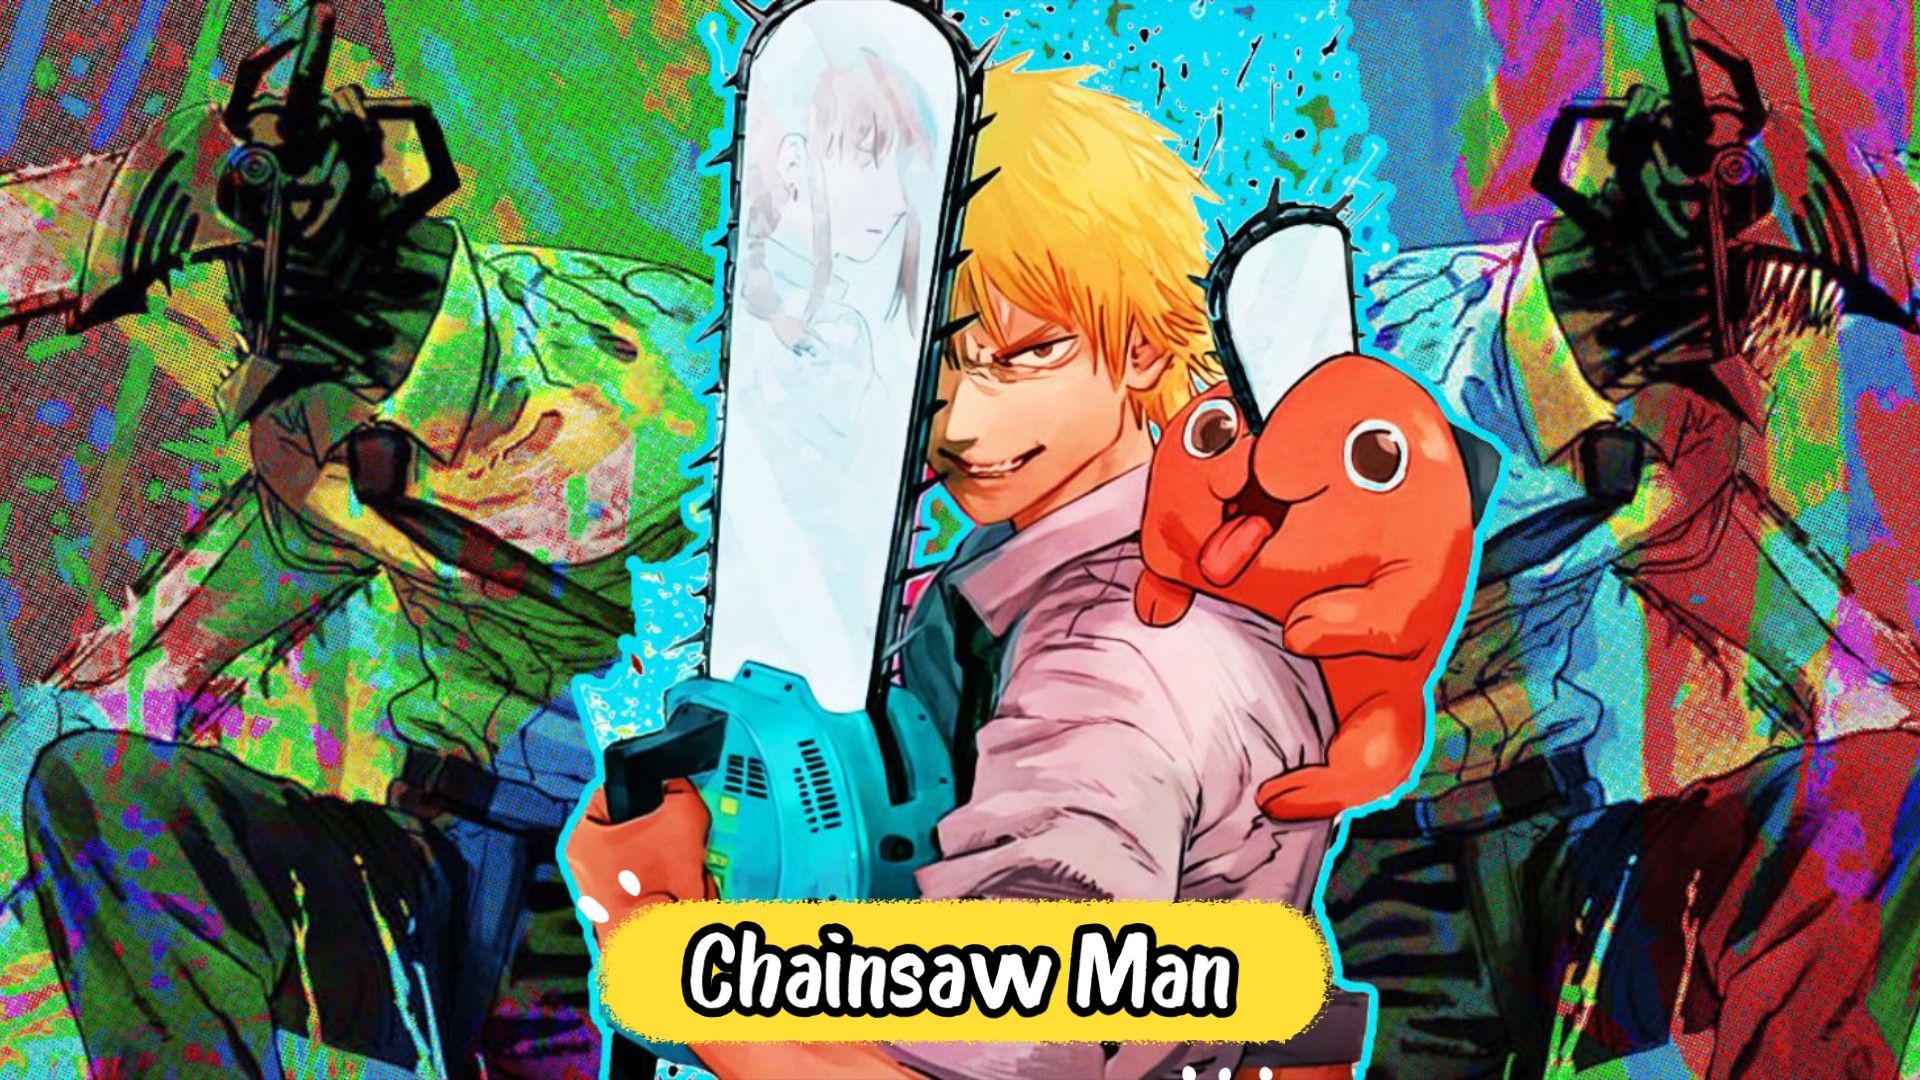 Chainsaw man episode 11 english sub - BiliBili